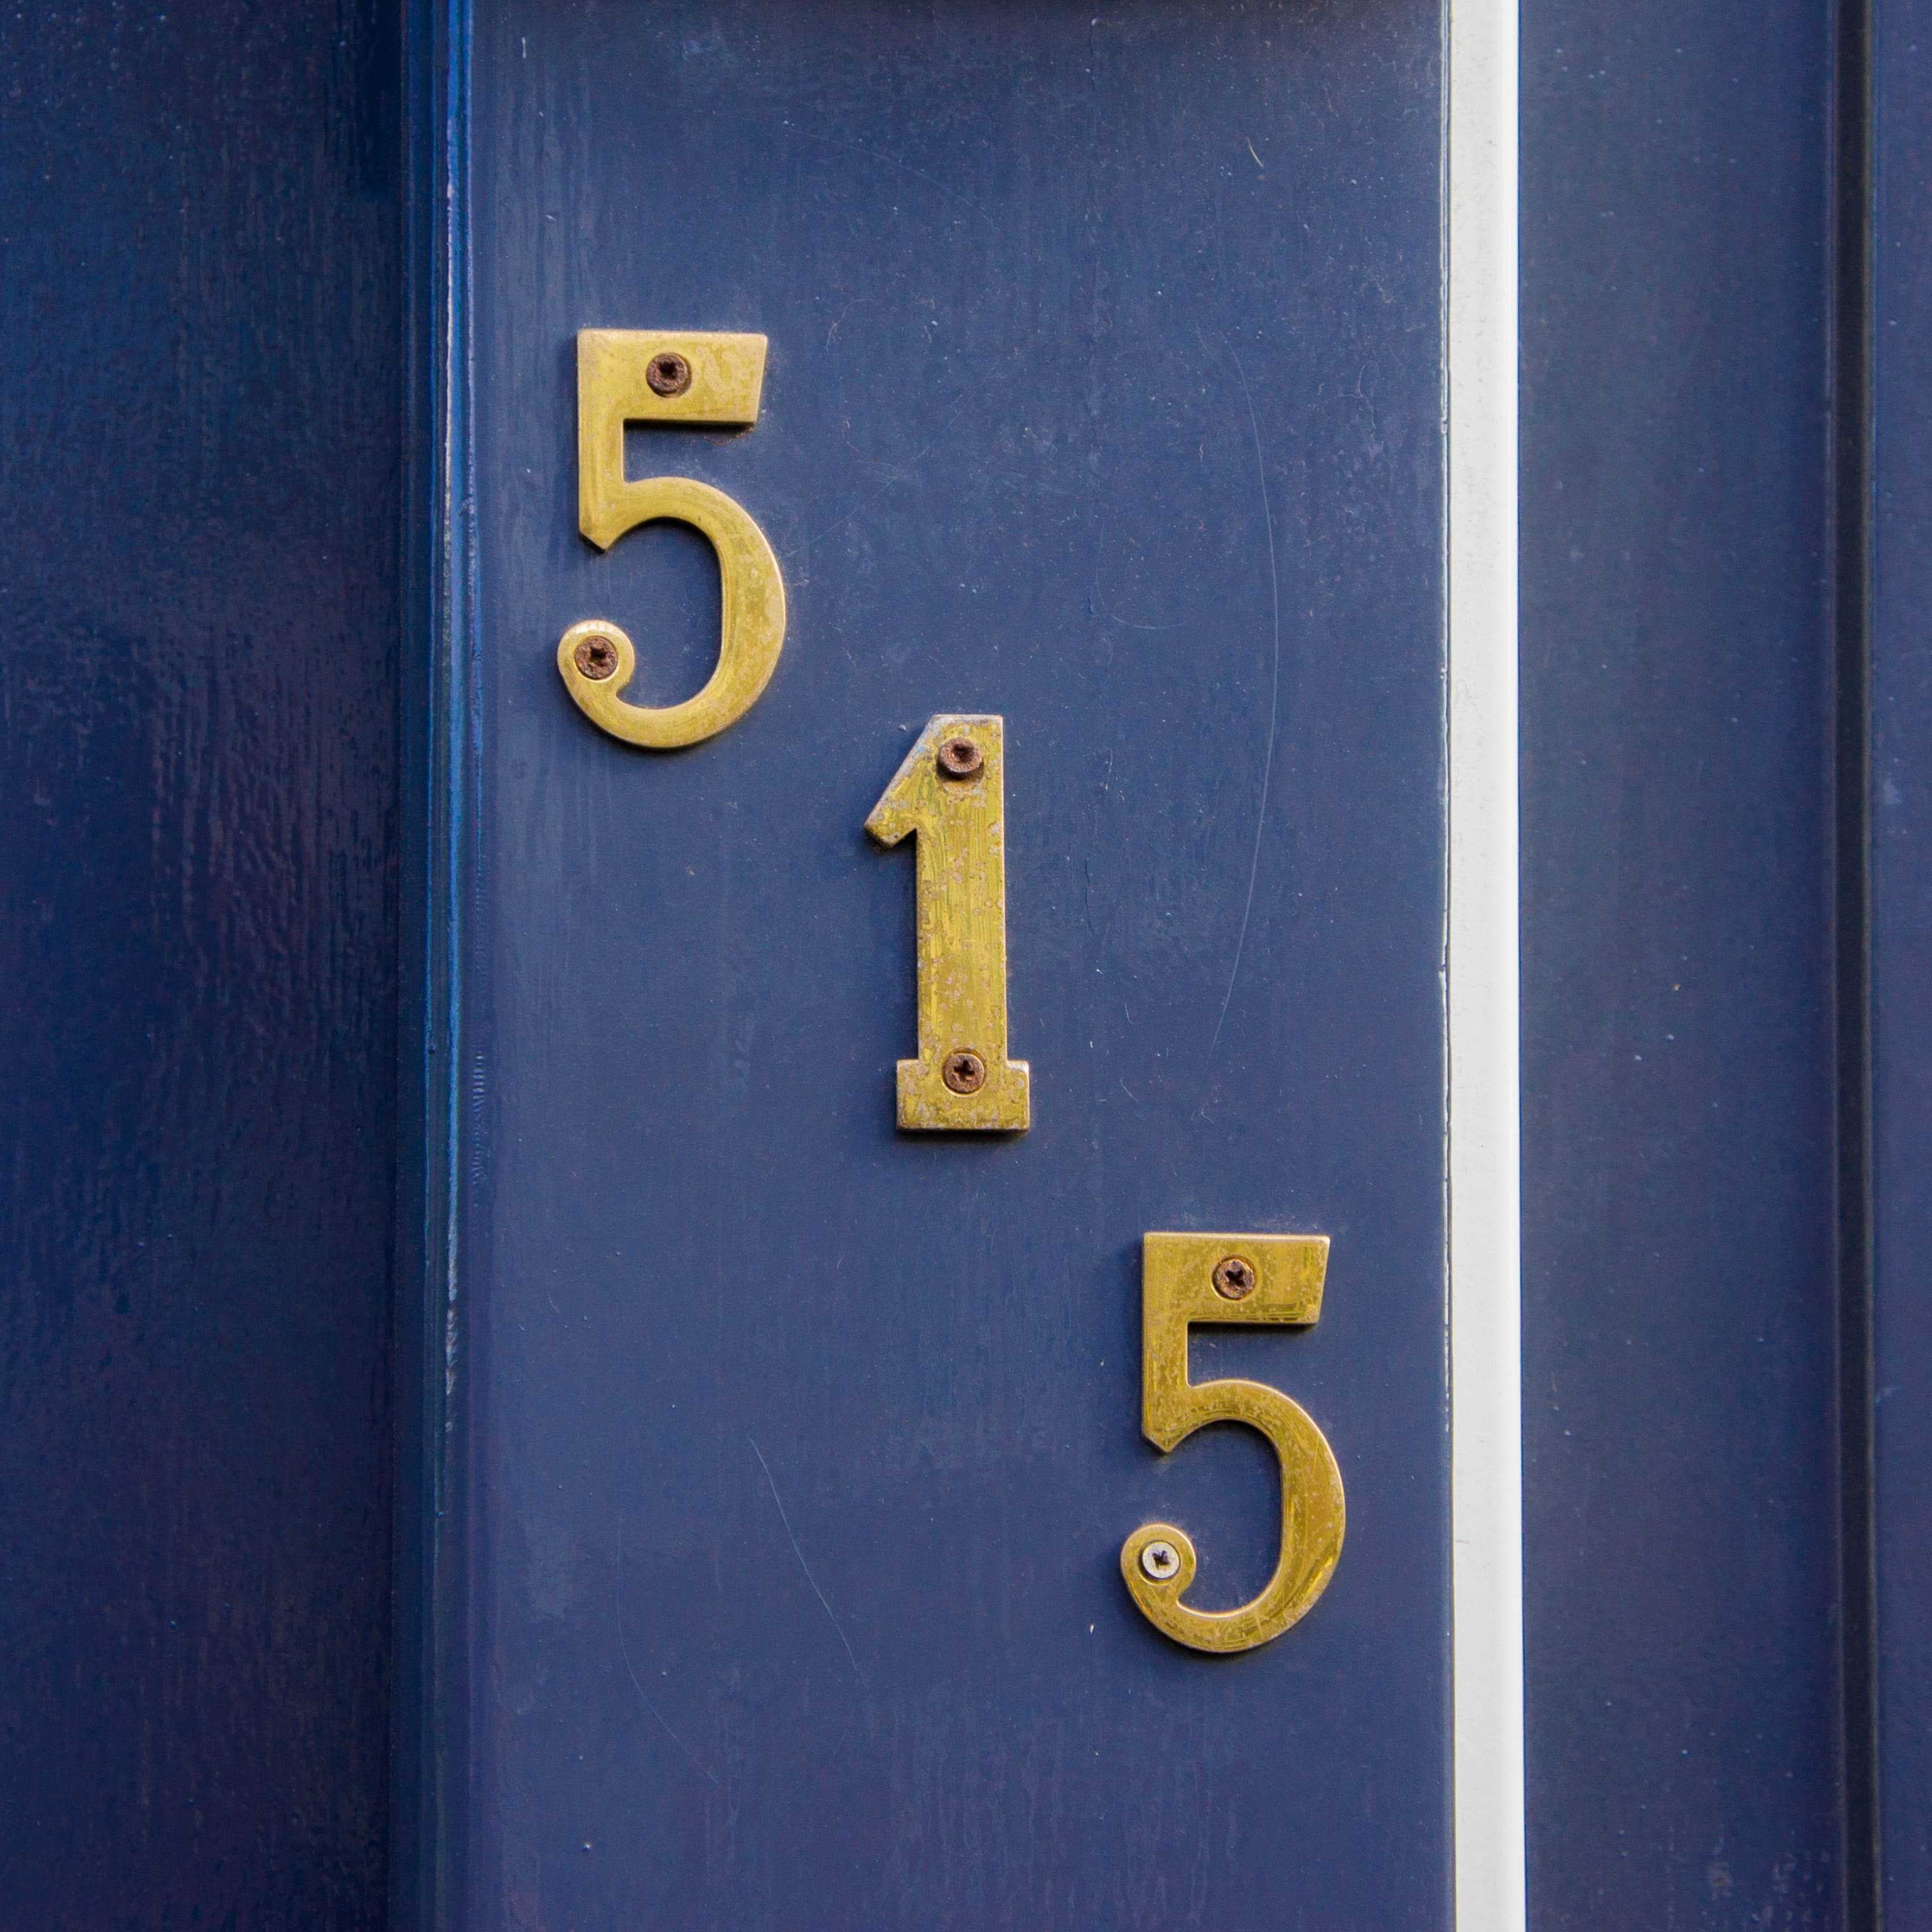 house number displayed on navy blue door trim